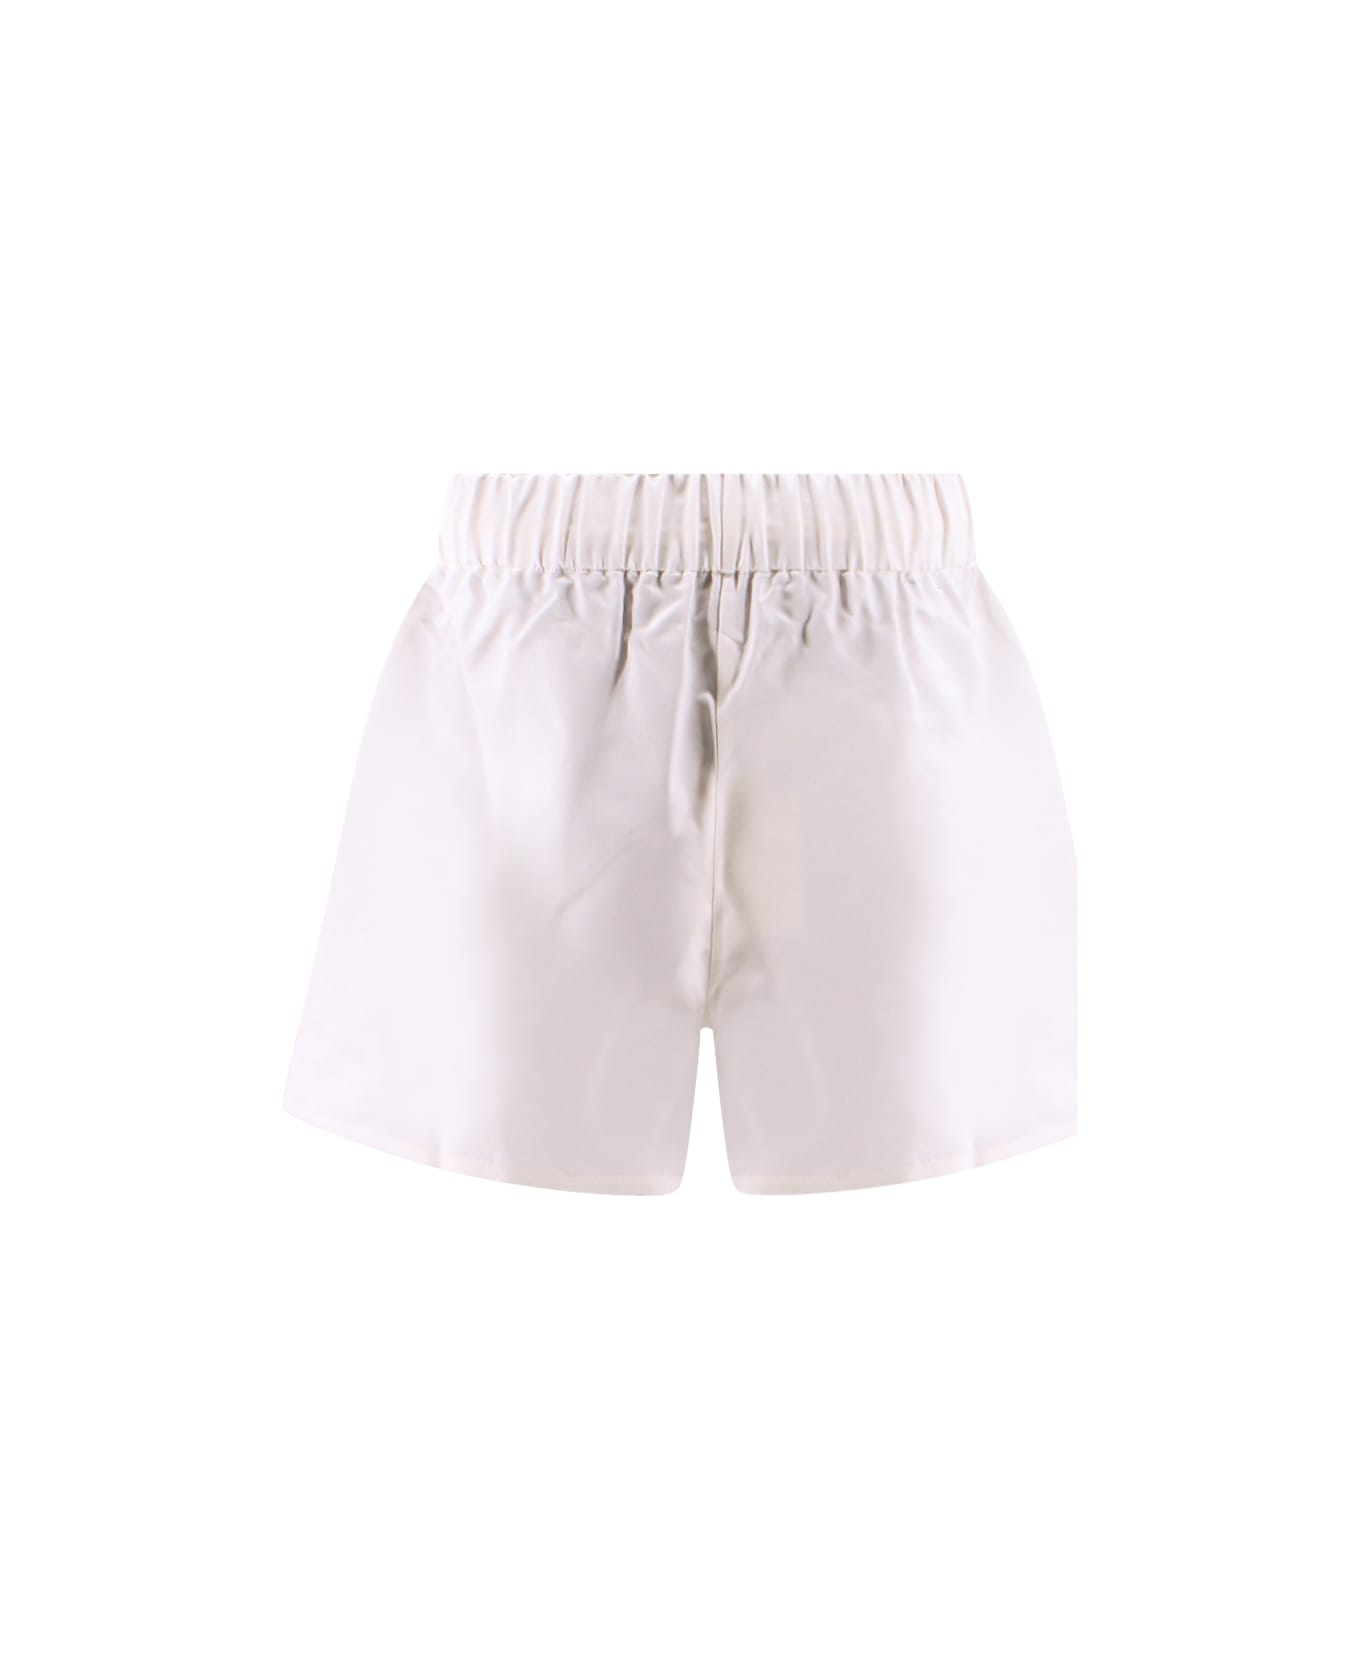 Sa Su Phi Shorts - White ショートパンツ